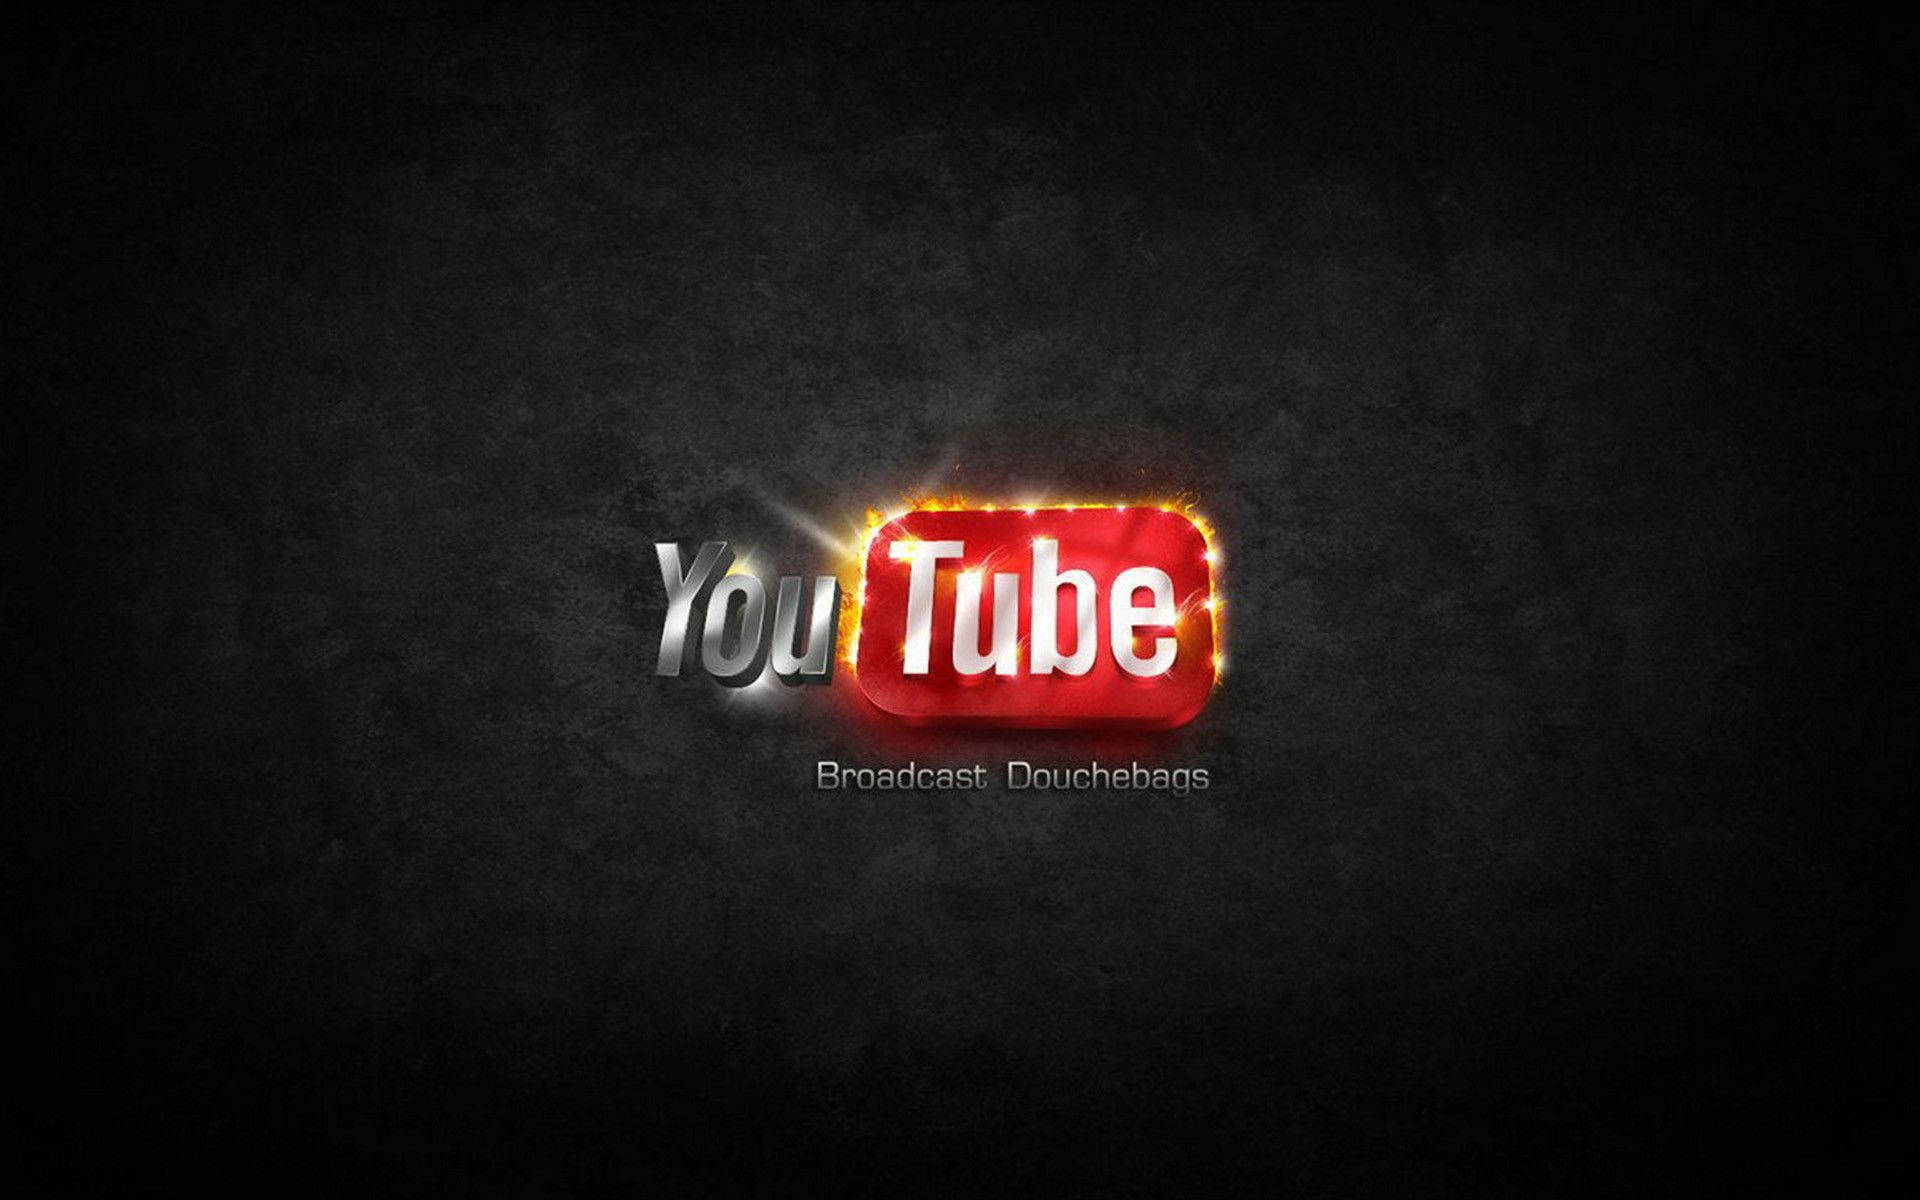 Youtube Logo In Blazing Fire Background